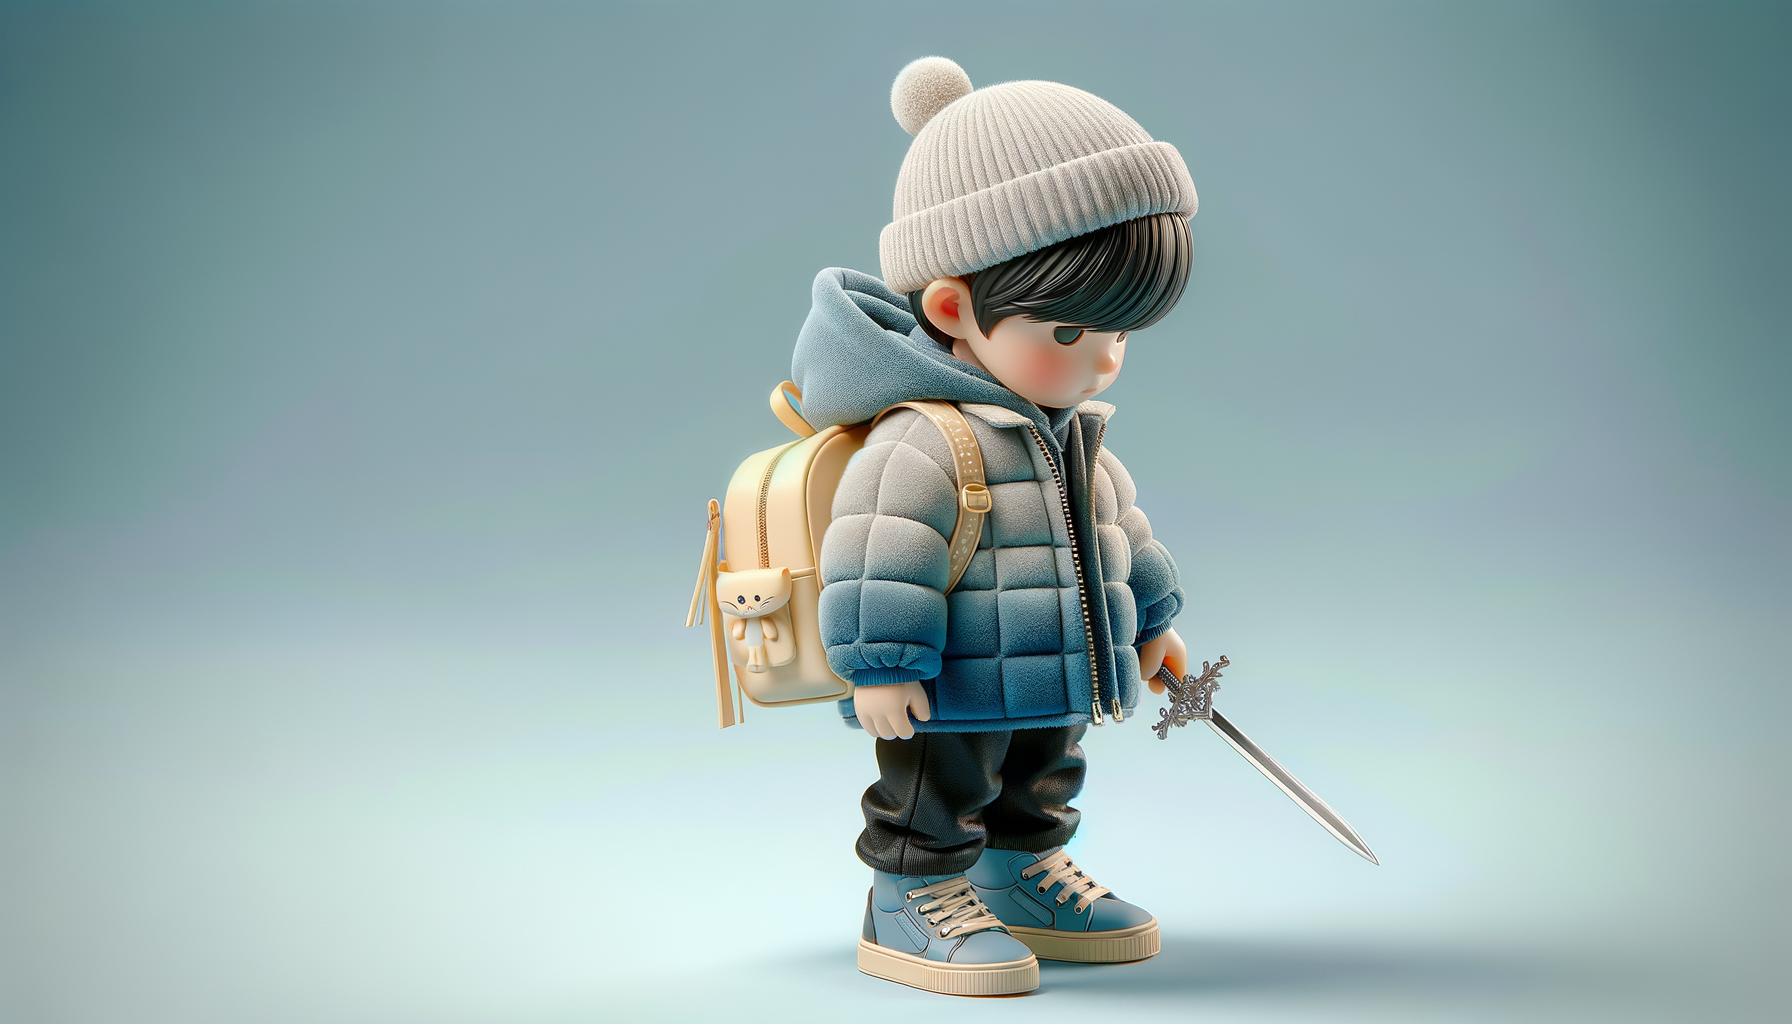 3D风：一个七岁的小男孩，穿着蓝色渐变小方格的羽绒服，黑色裤子，蓝色球鞋，戴着一顶白兔帽，背着一个淡黄色小书包，手里拿着一把银色的塑料玩具剑玩耍